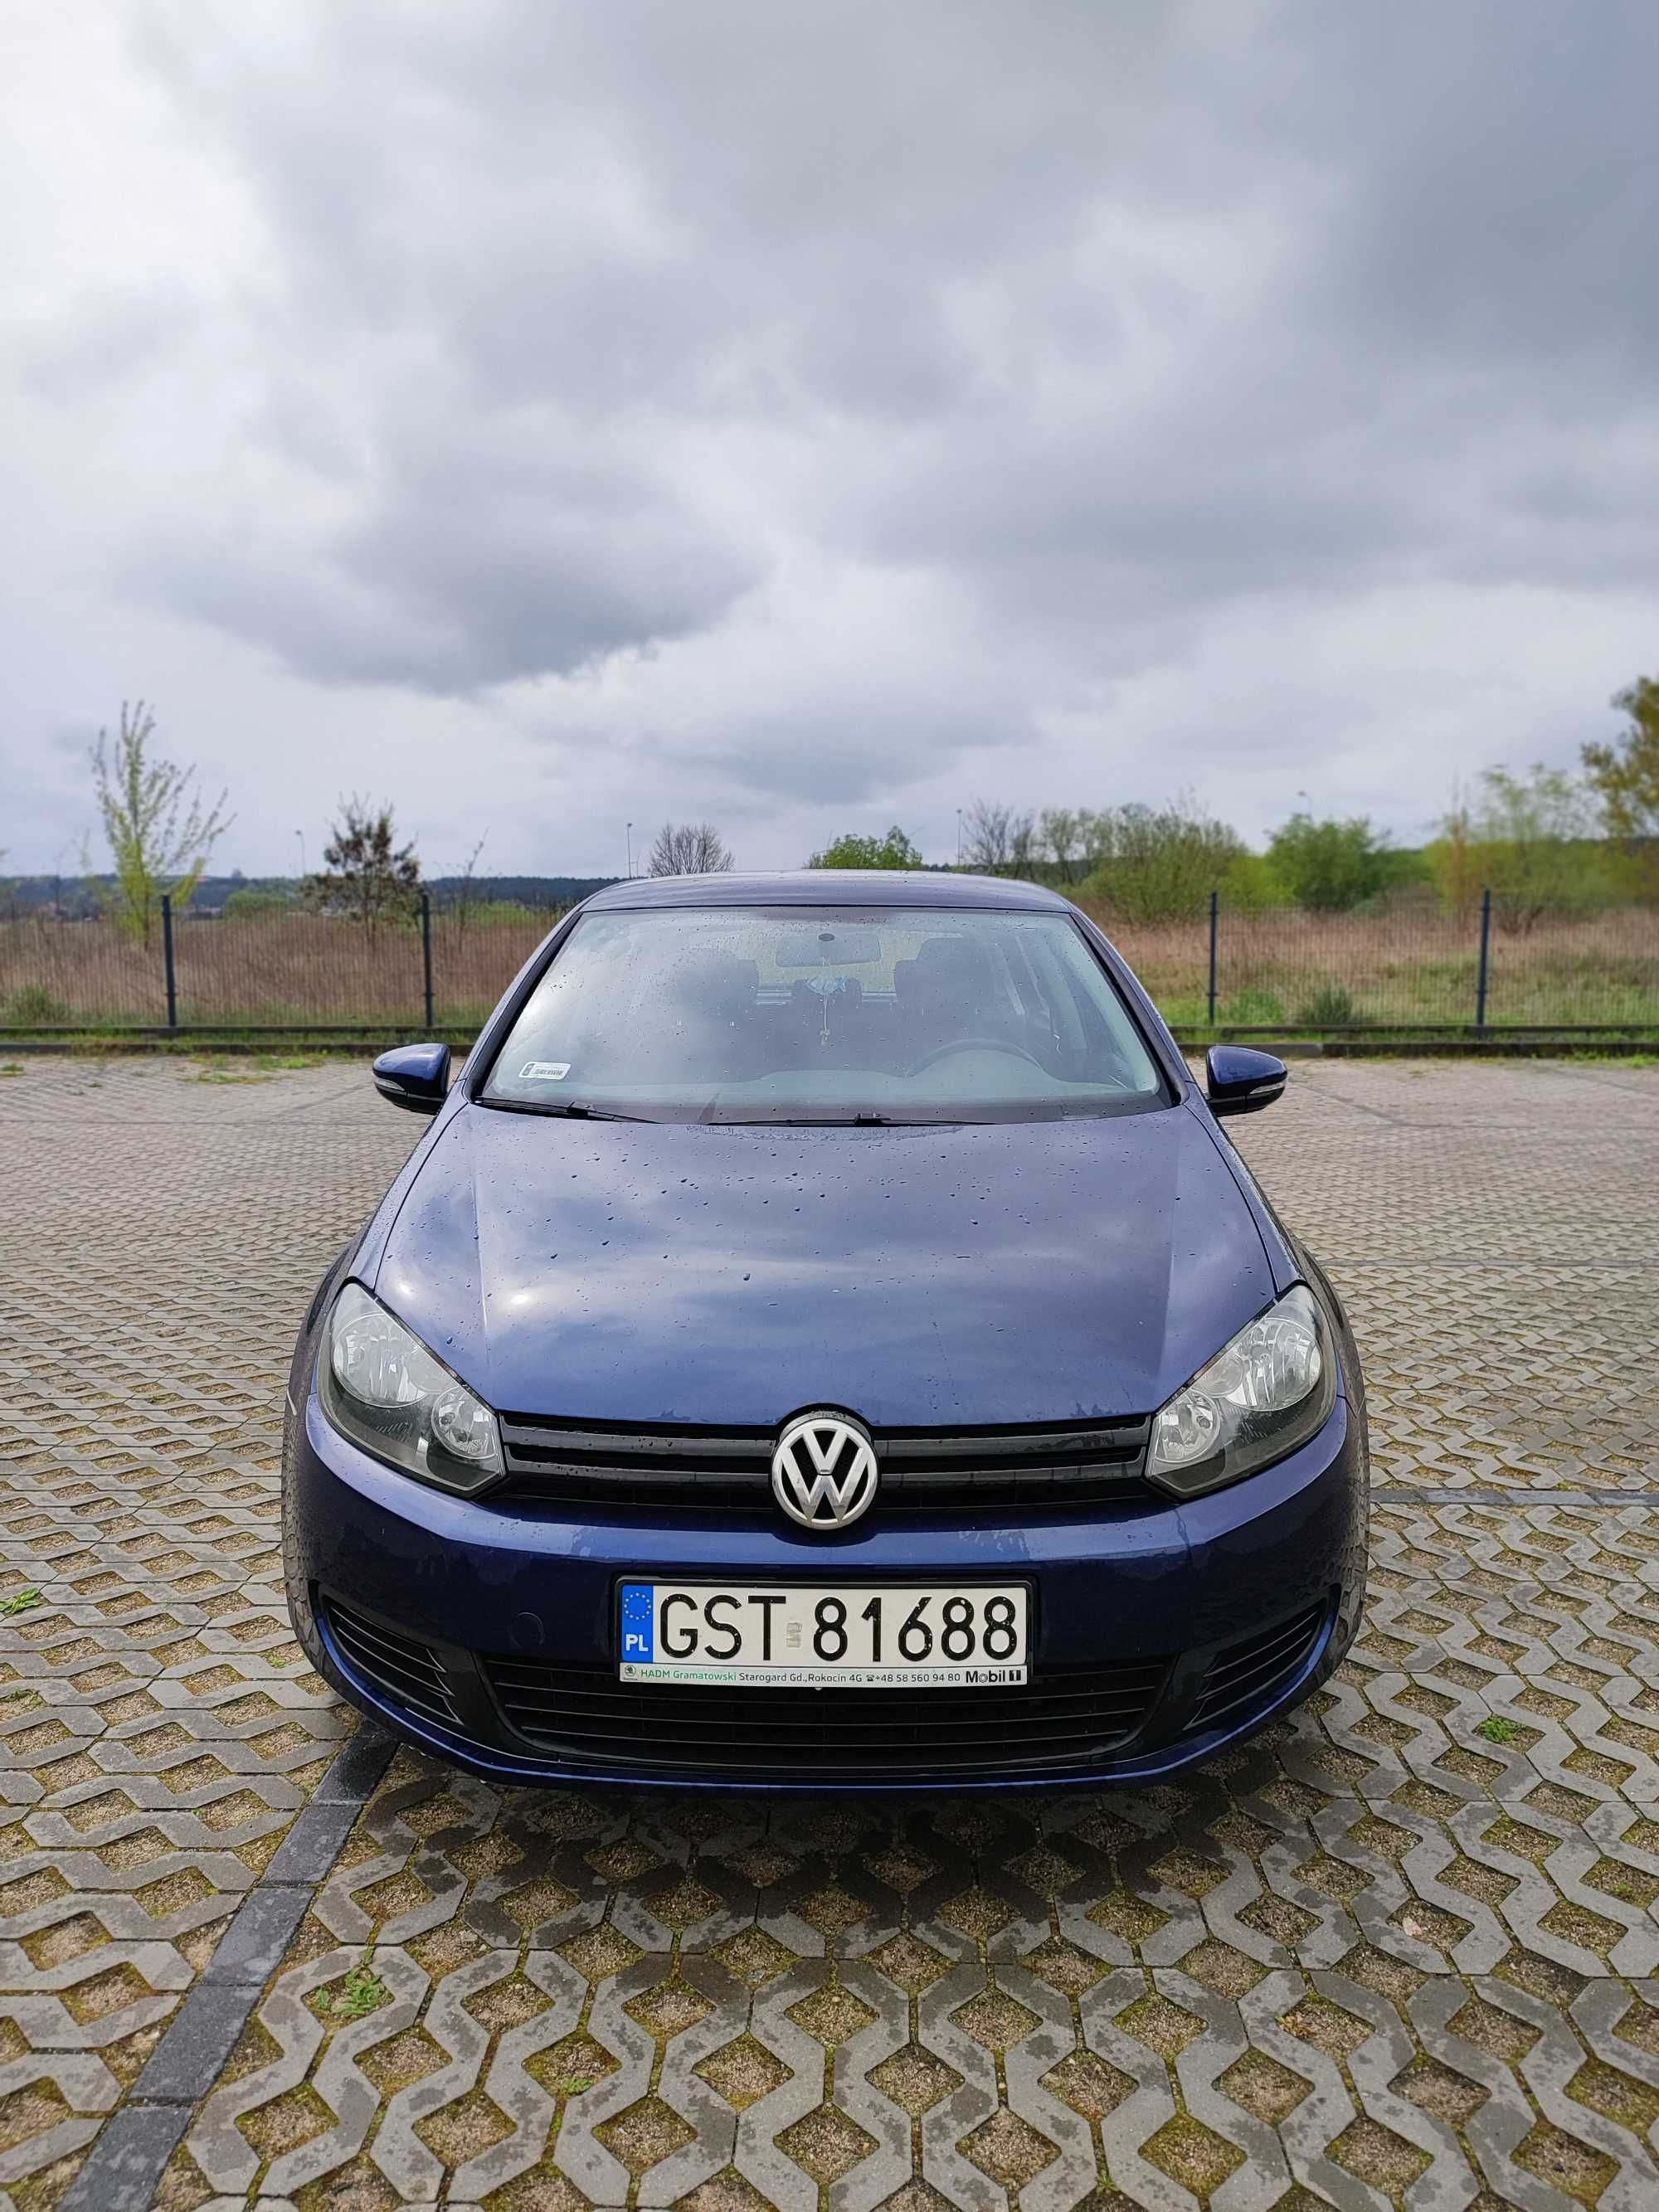 Volkswagen Golf 6 1.6 TDI  2012r